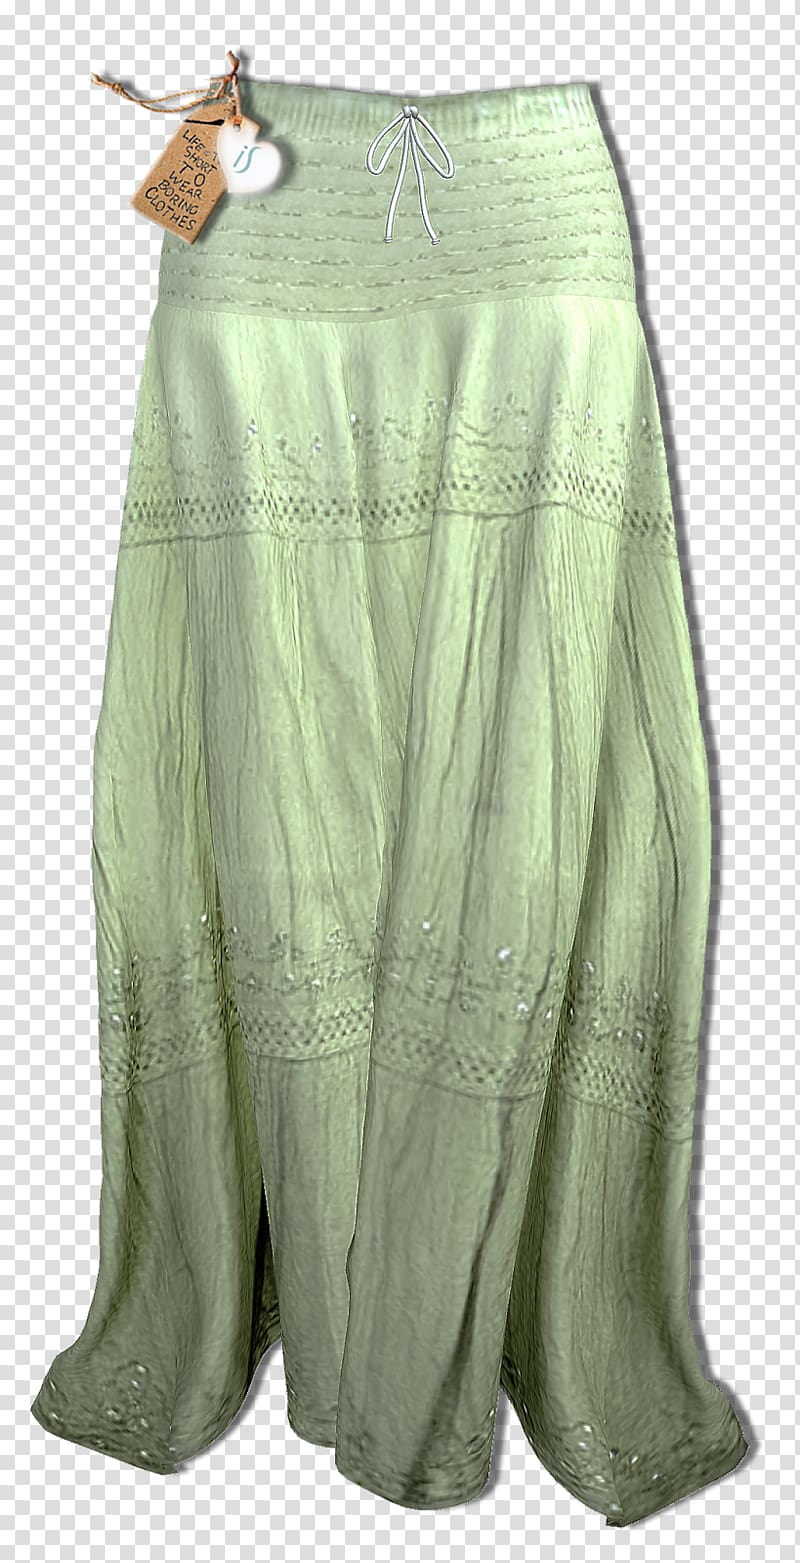 Skirt Clothing Boho-chic Fashion Second Life, boho style transparent background PNG clipart